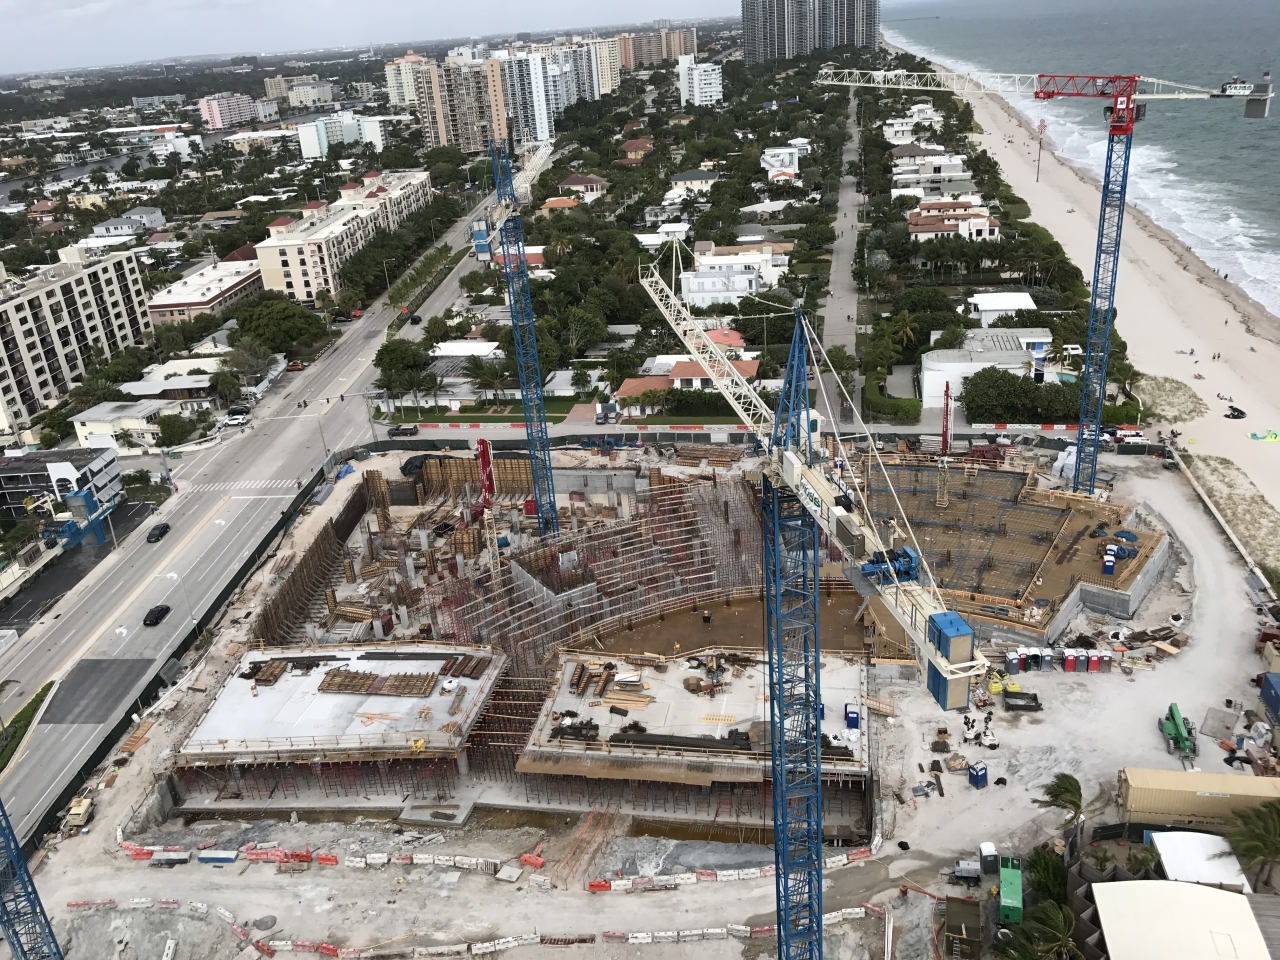 Auberge Beach Fort Lauderdale Construction Update